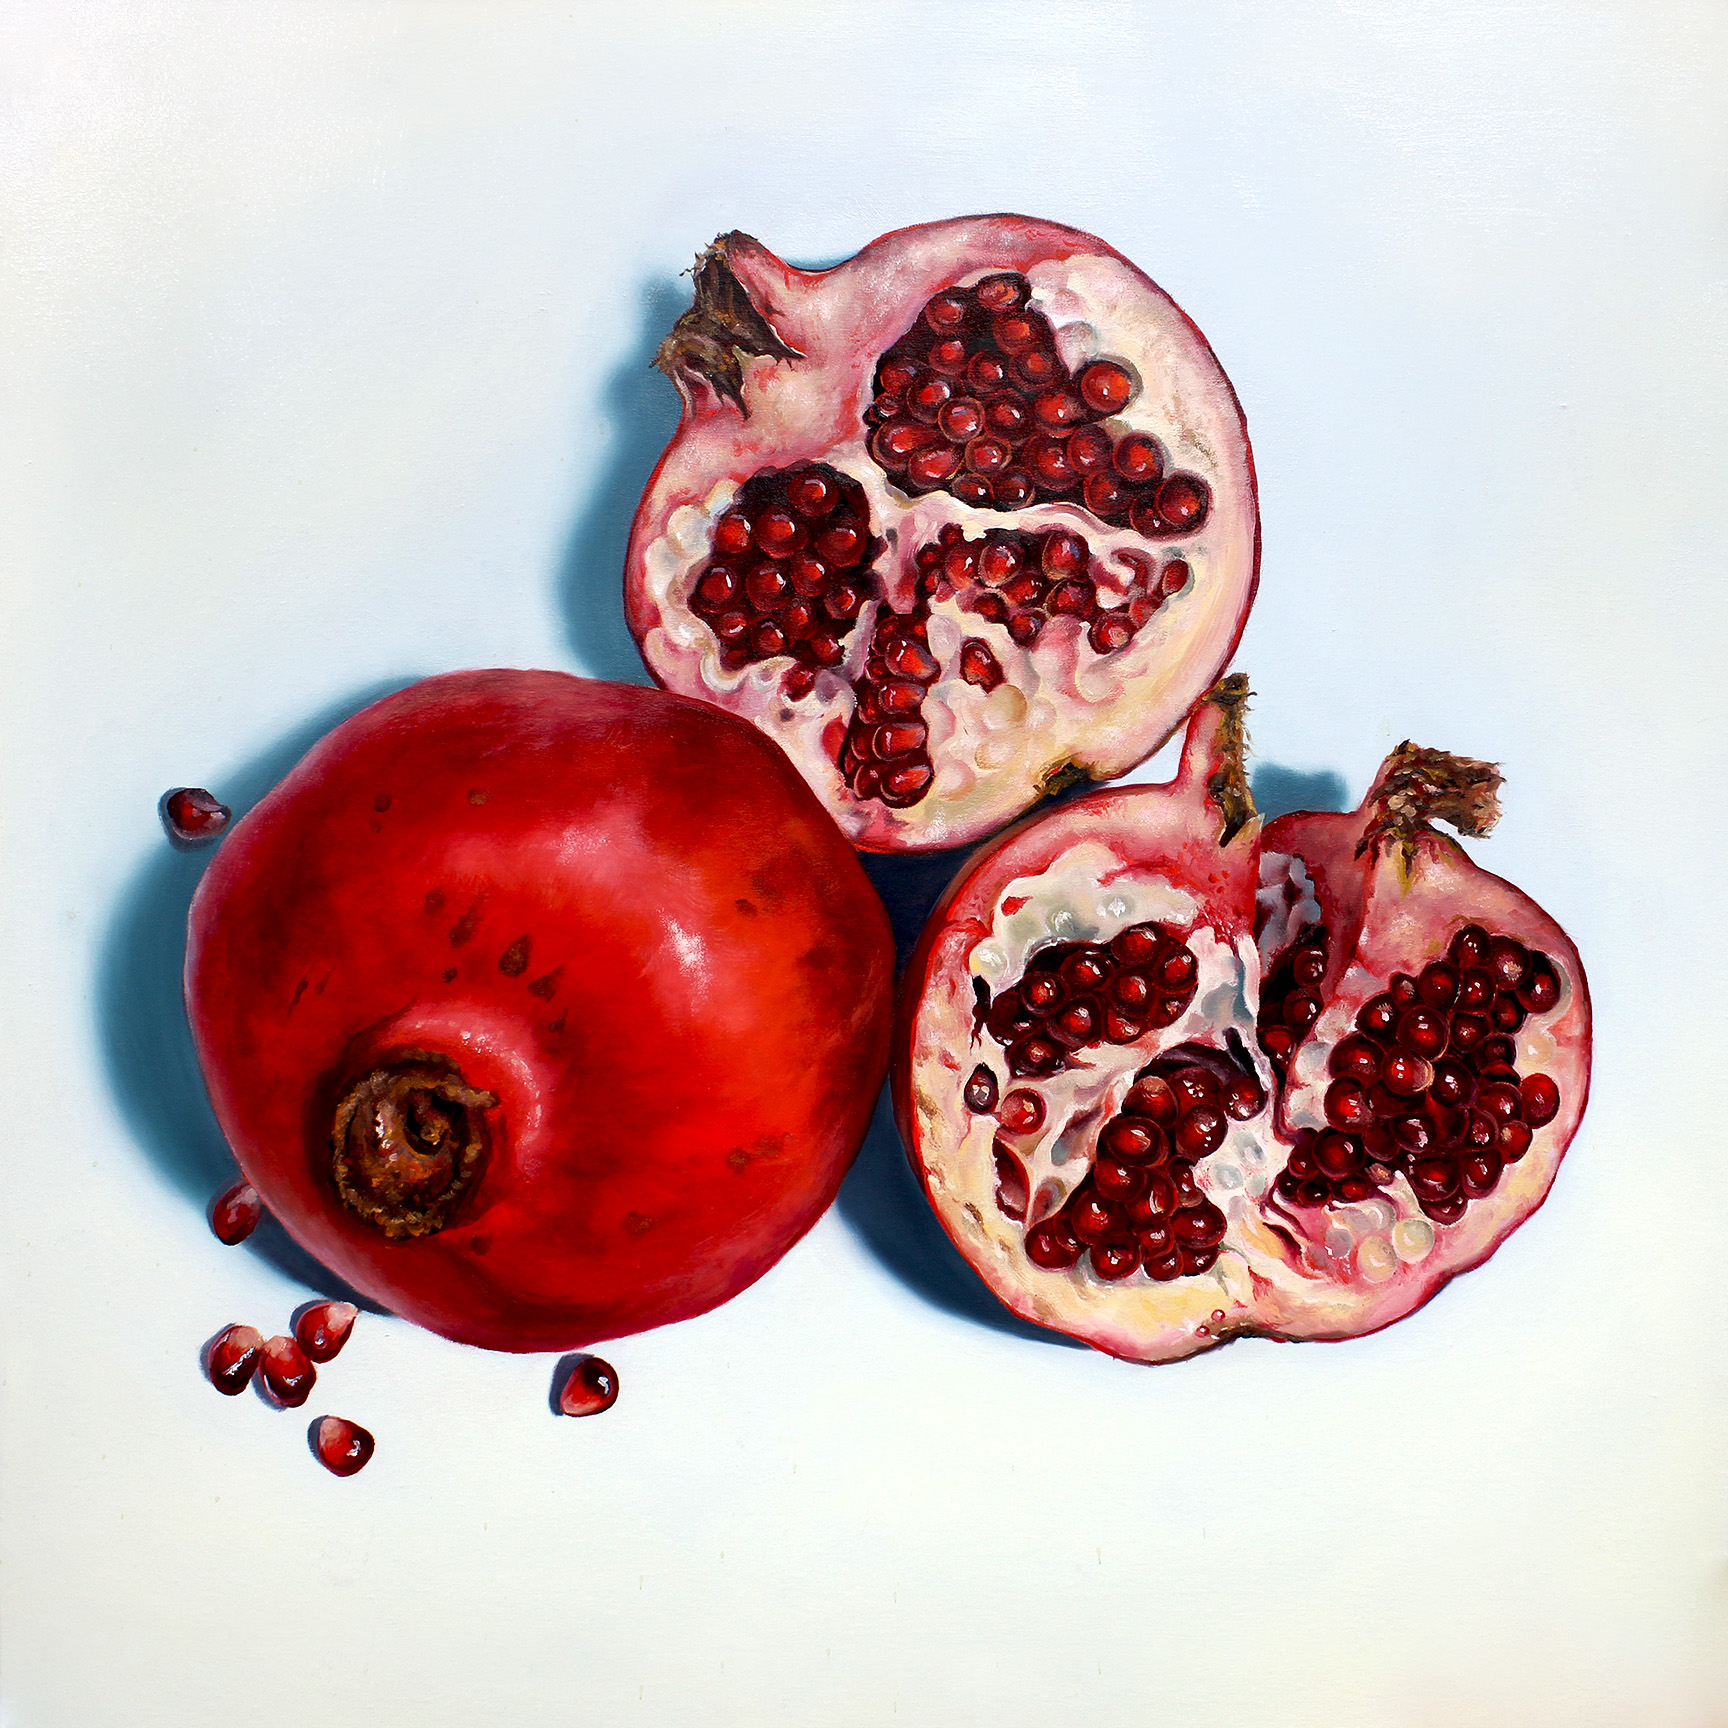 "Pomegranate 2" 24x24 Original Oil Painting by Abra Johnson